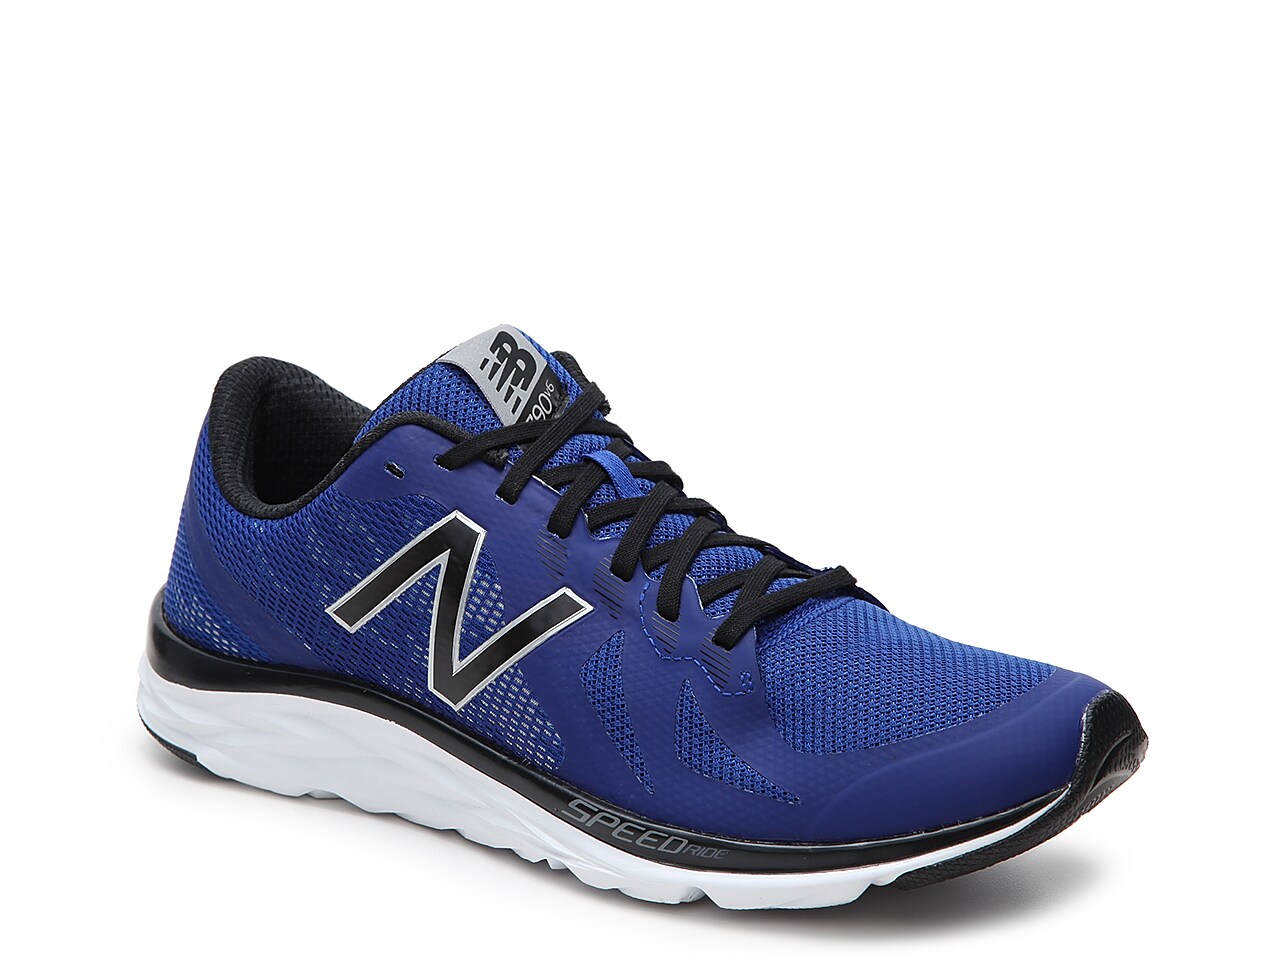 New Balance 790 v6 Lightweight Running Shoe - Mens | DSW